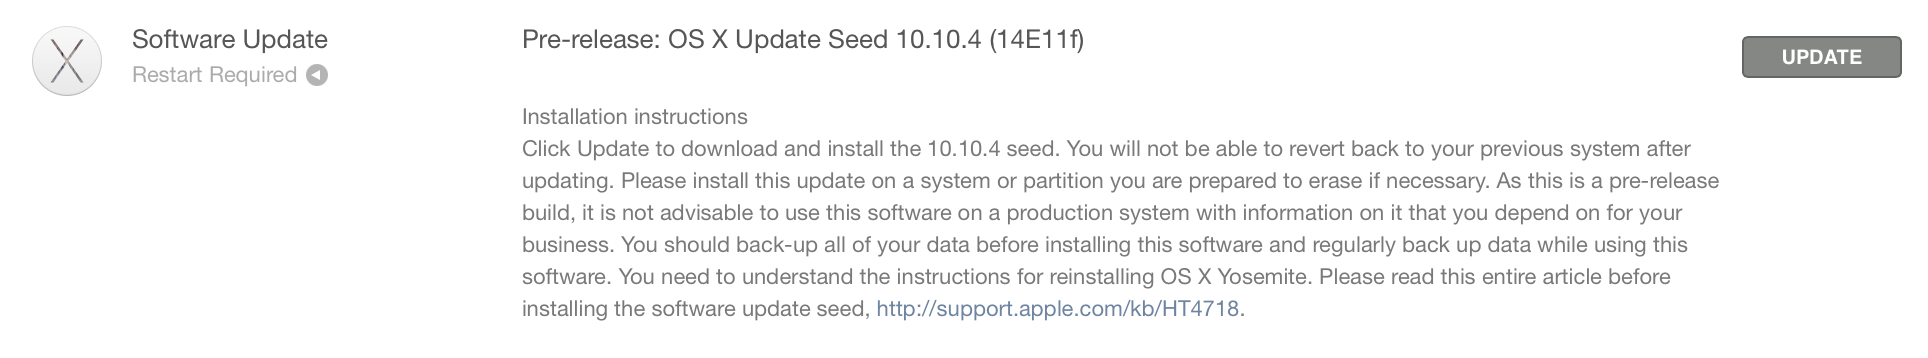 Wersja beta systemu OS X 10.10.4